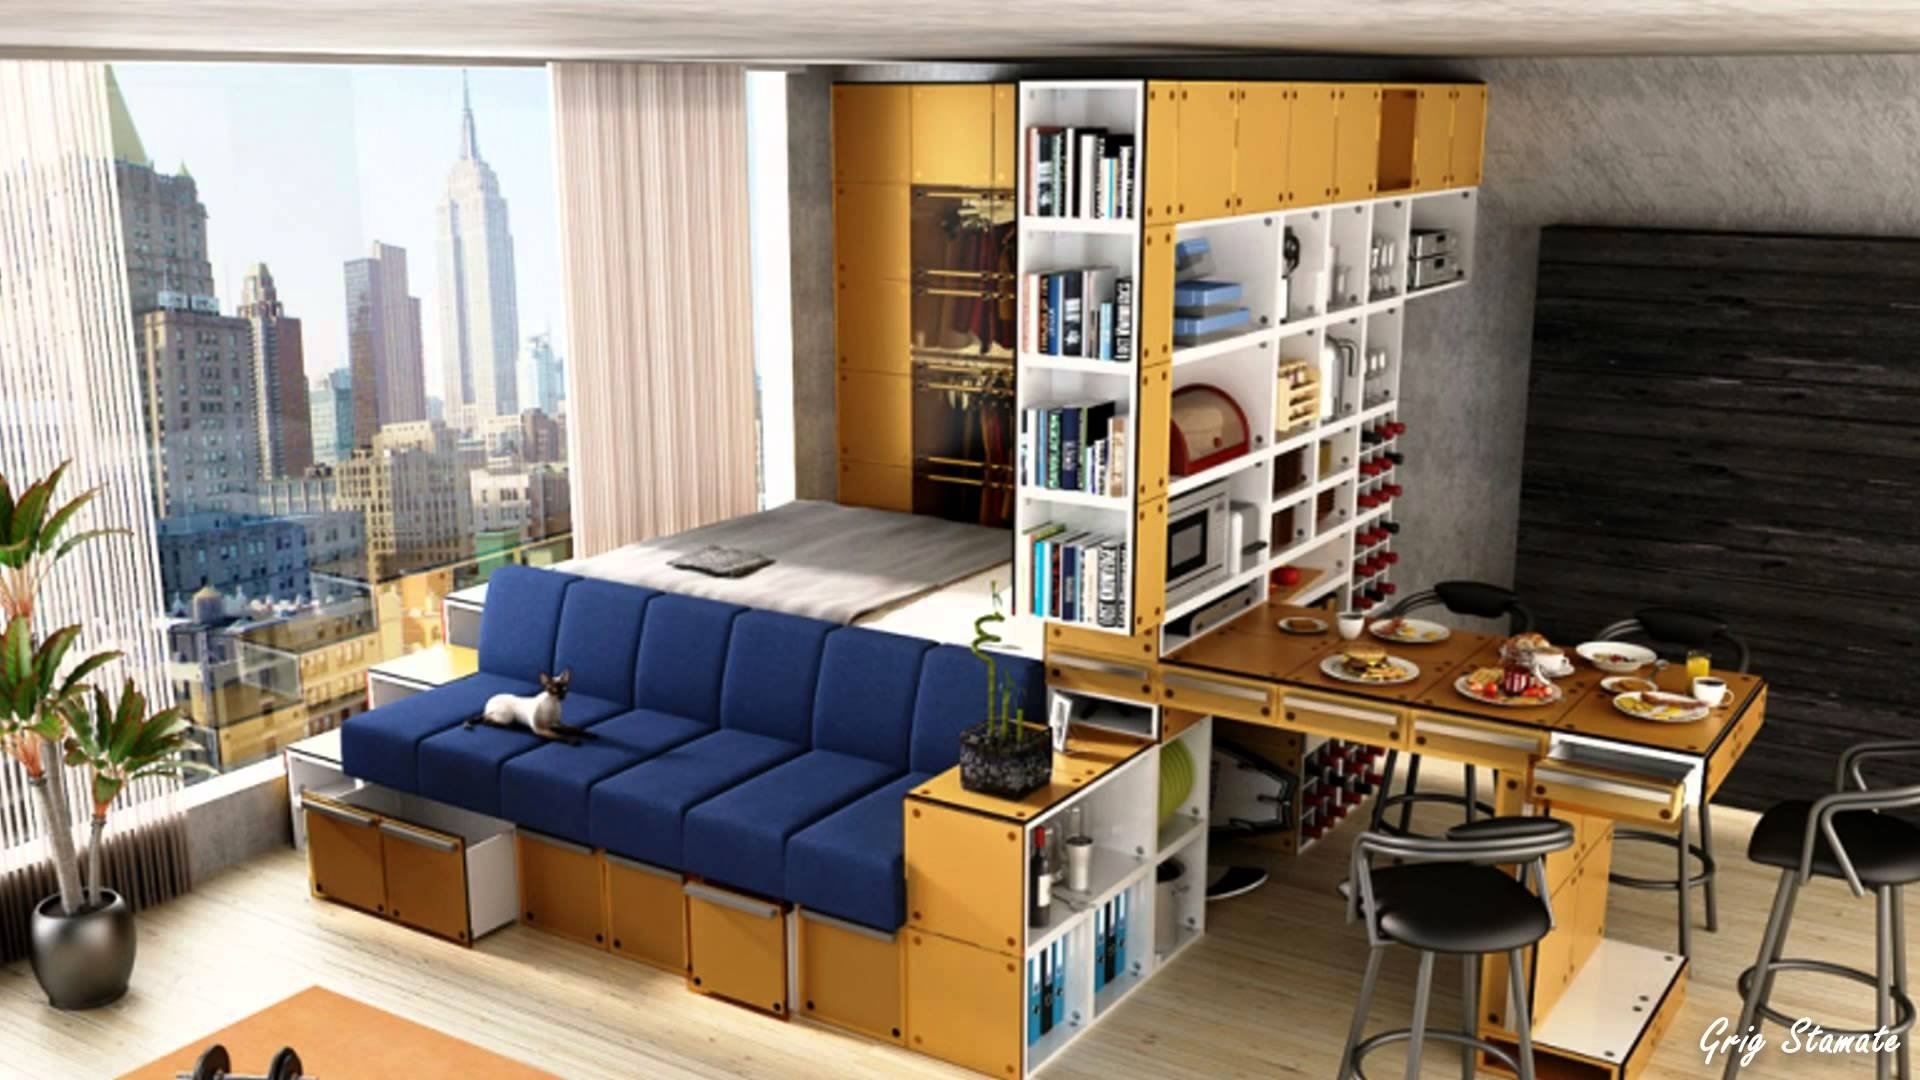 10 Lovely Ideas For A Studio Apartment platform bed small studio apartment ideas youtube 2022